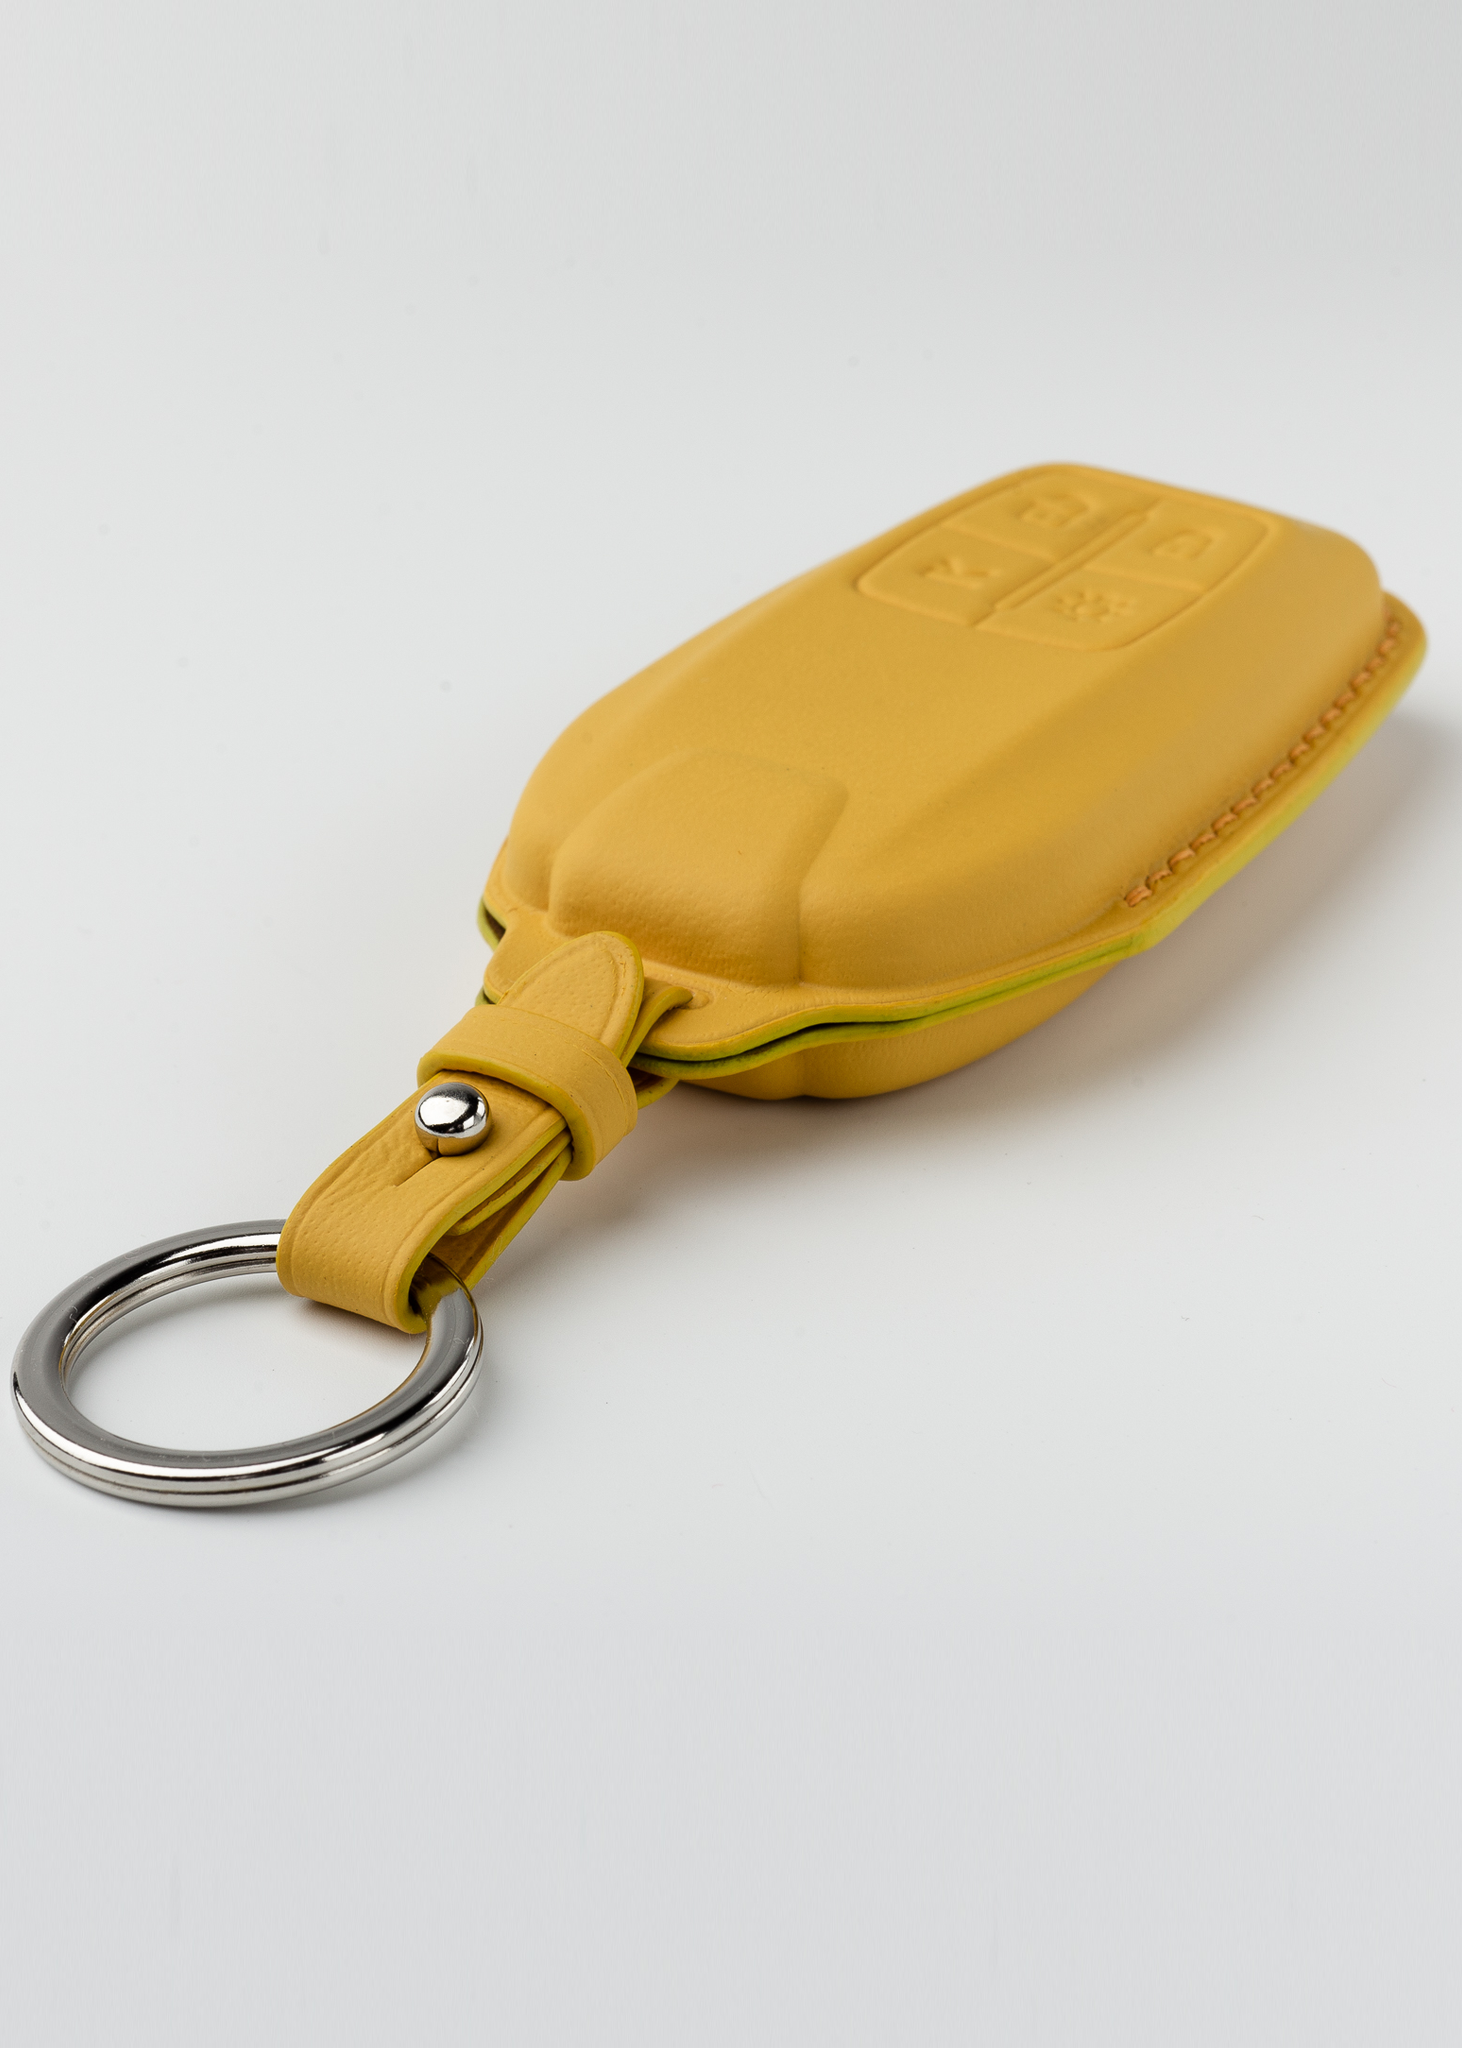 Timotheus for Ferrari key fob cover case, Compatible with Ferrari key case, Handmade Genuine Leather for Ferrari keychains | FR11